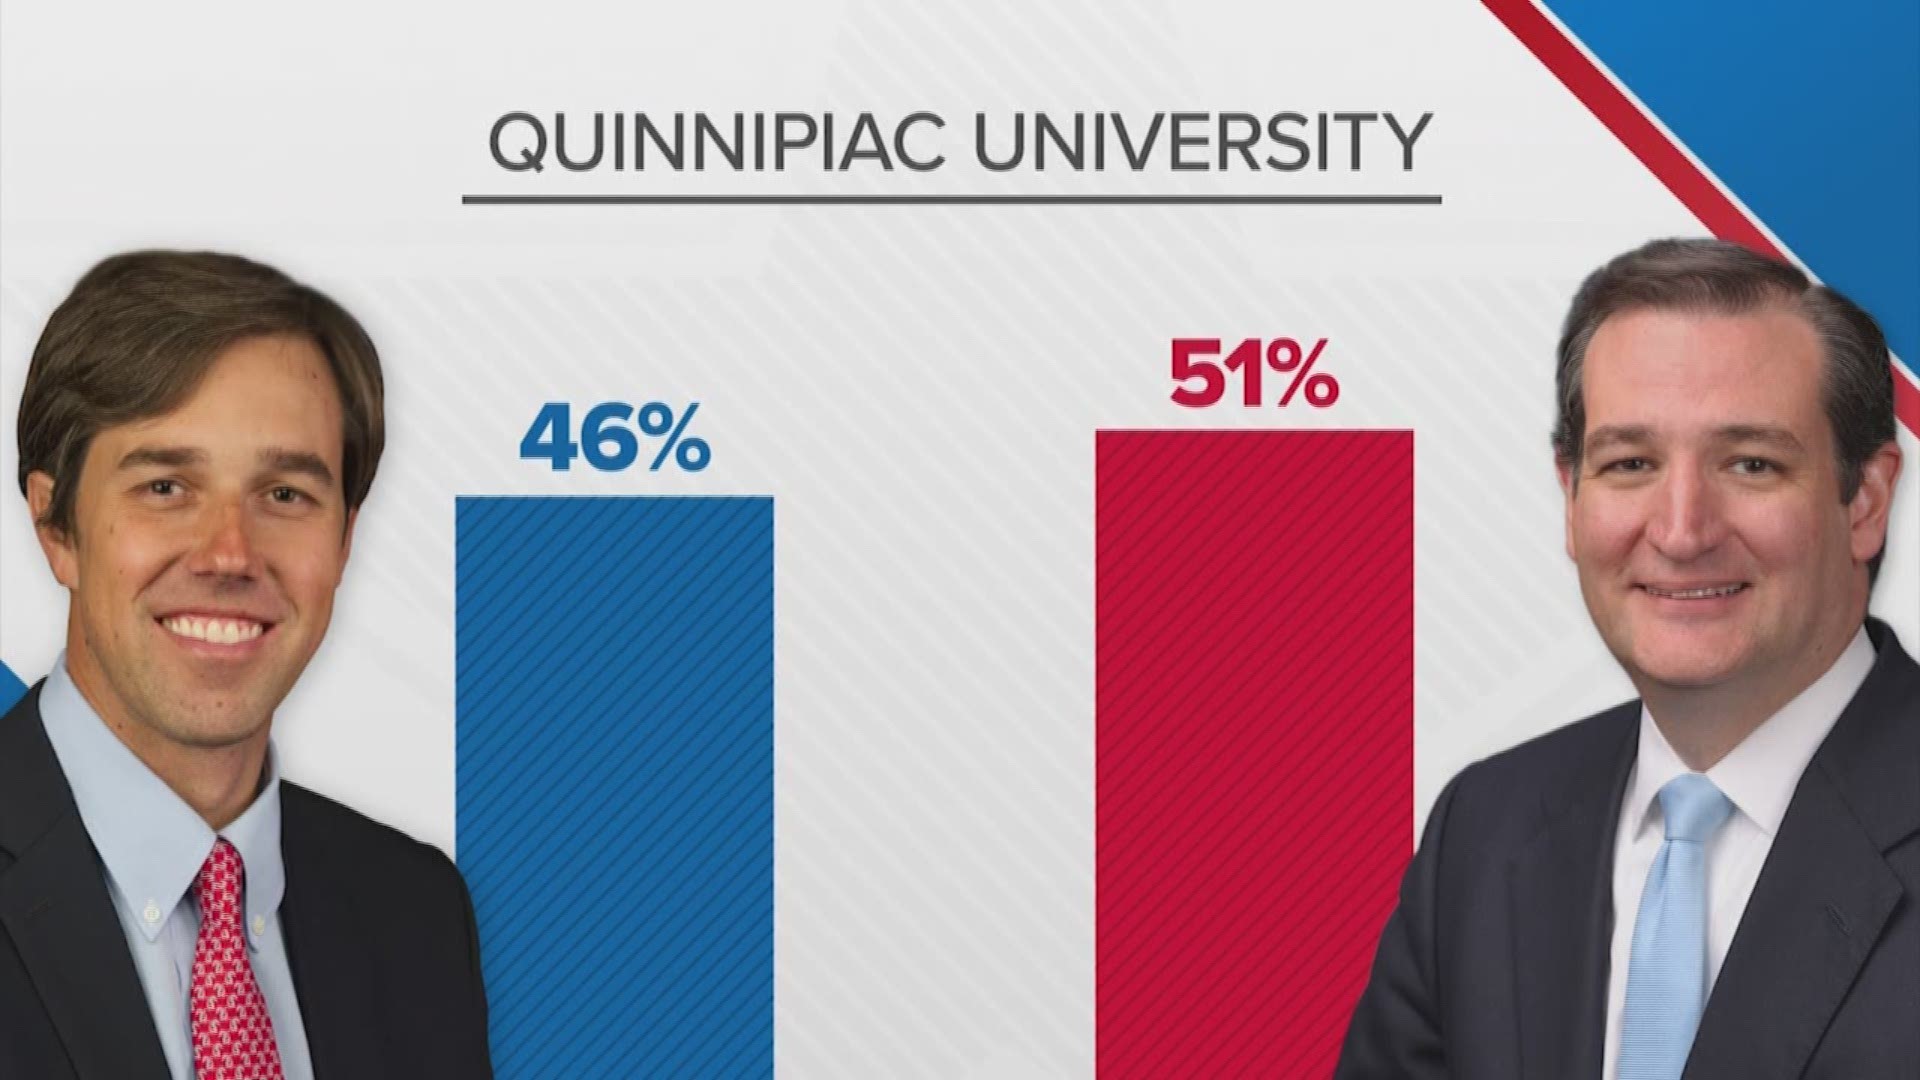 Quinnipiac University shows Senator Ted Cruz ahead of representative Beto O'Rourke, 51 to 46 percent. Two weeks ago, Cruz had a nine point lead.